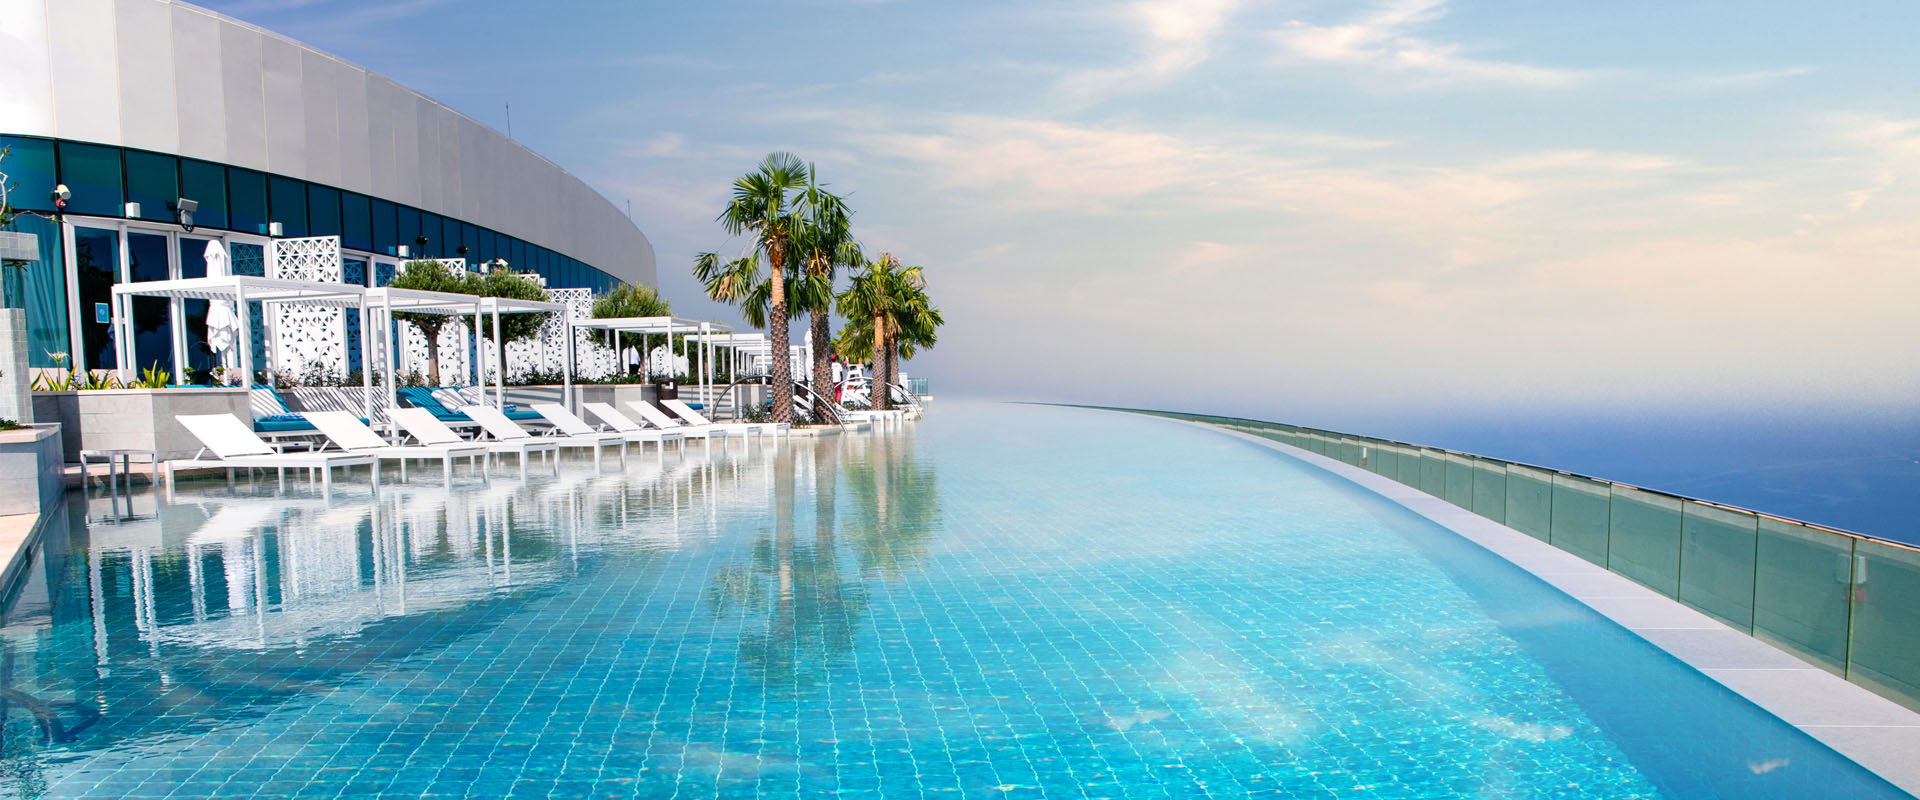 address-beach-hotel-swimming-pool-by-desert-leisure